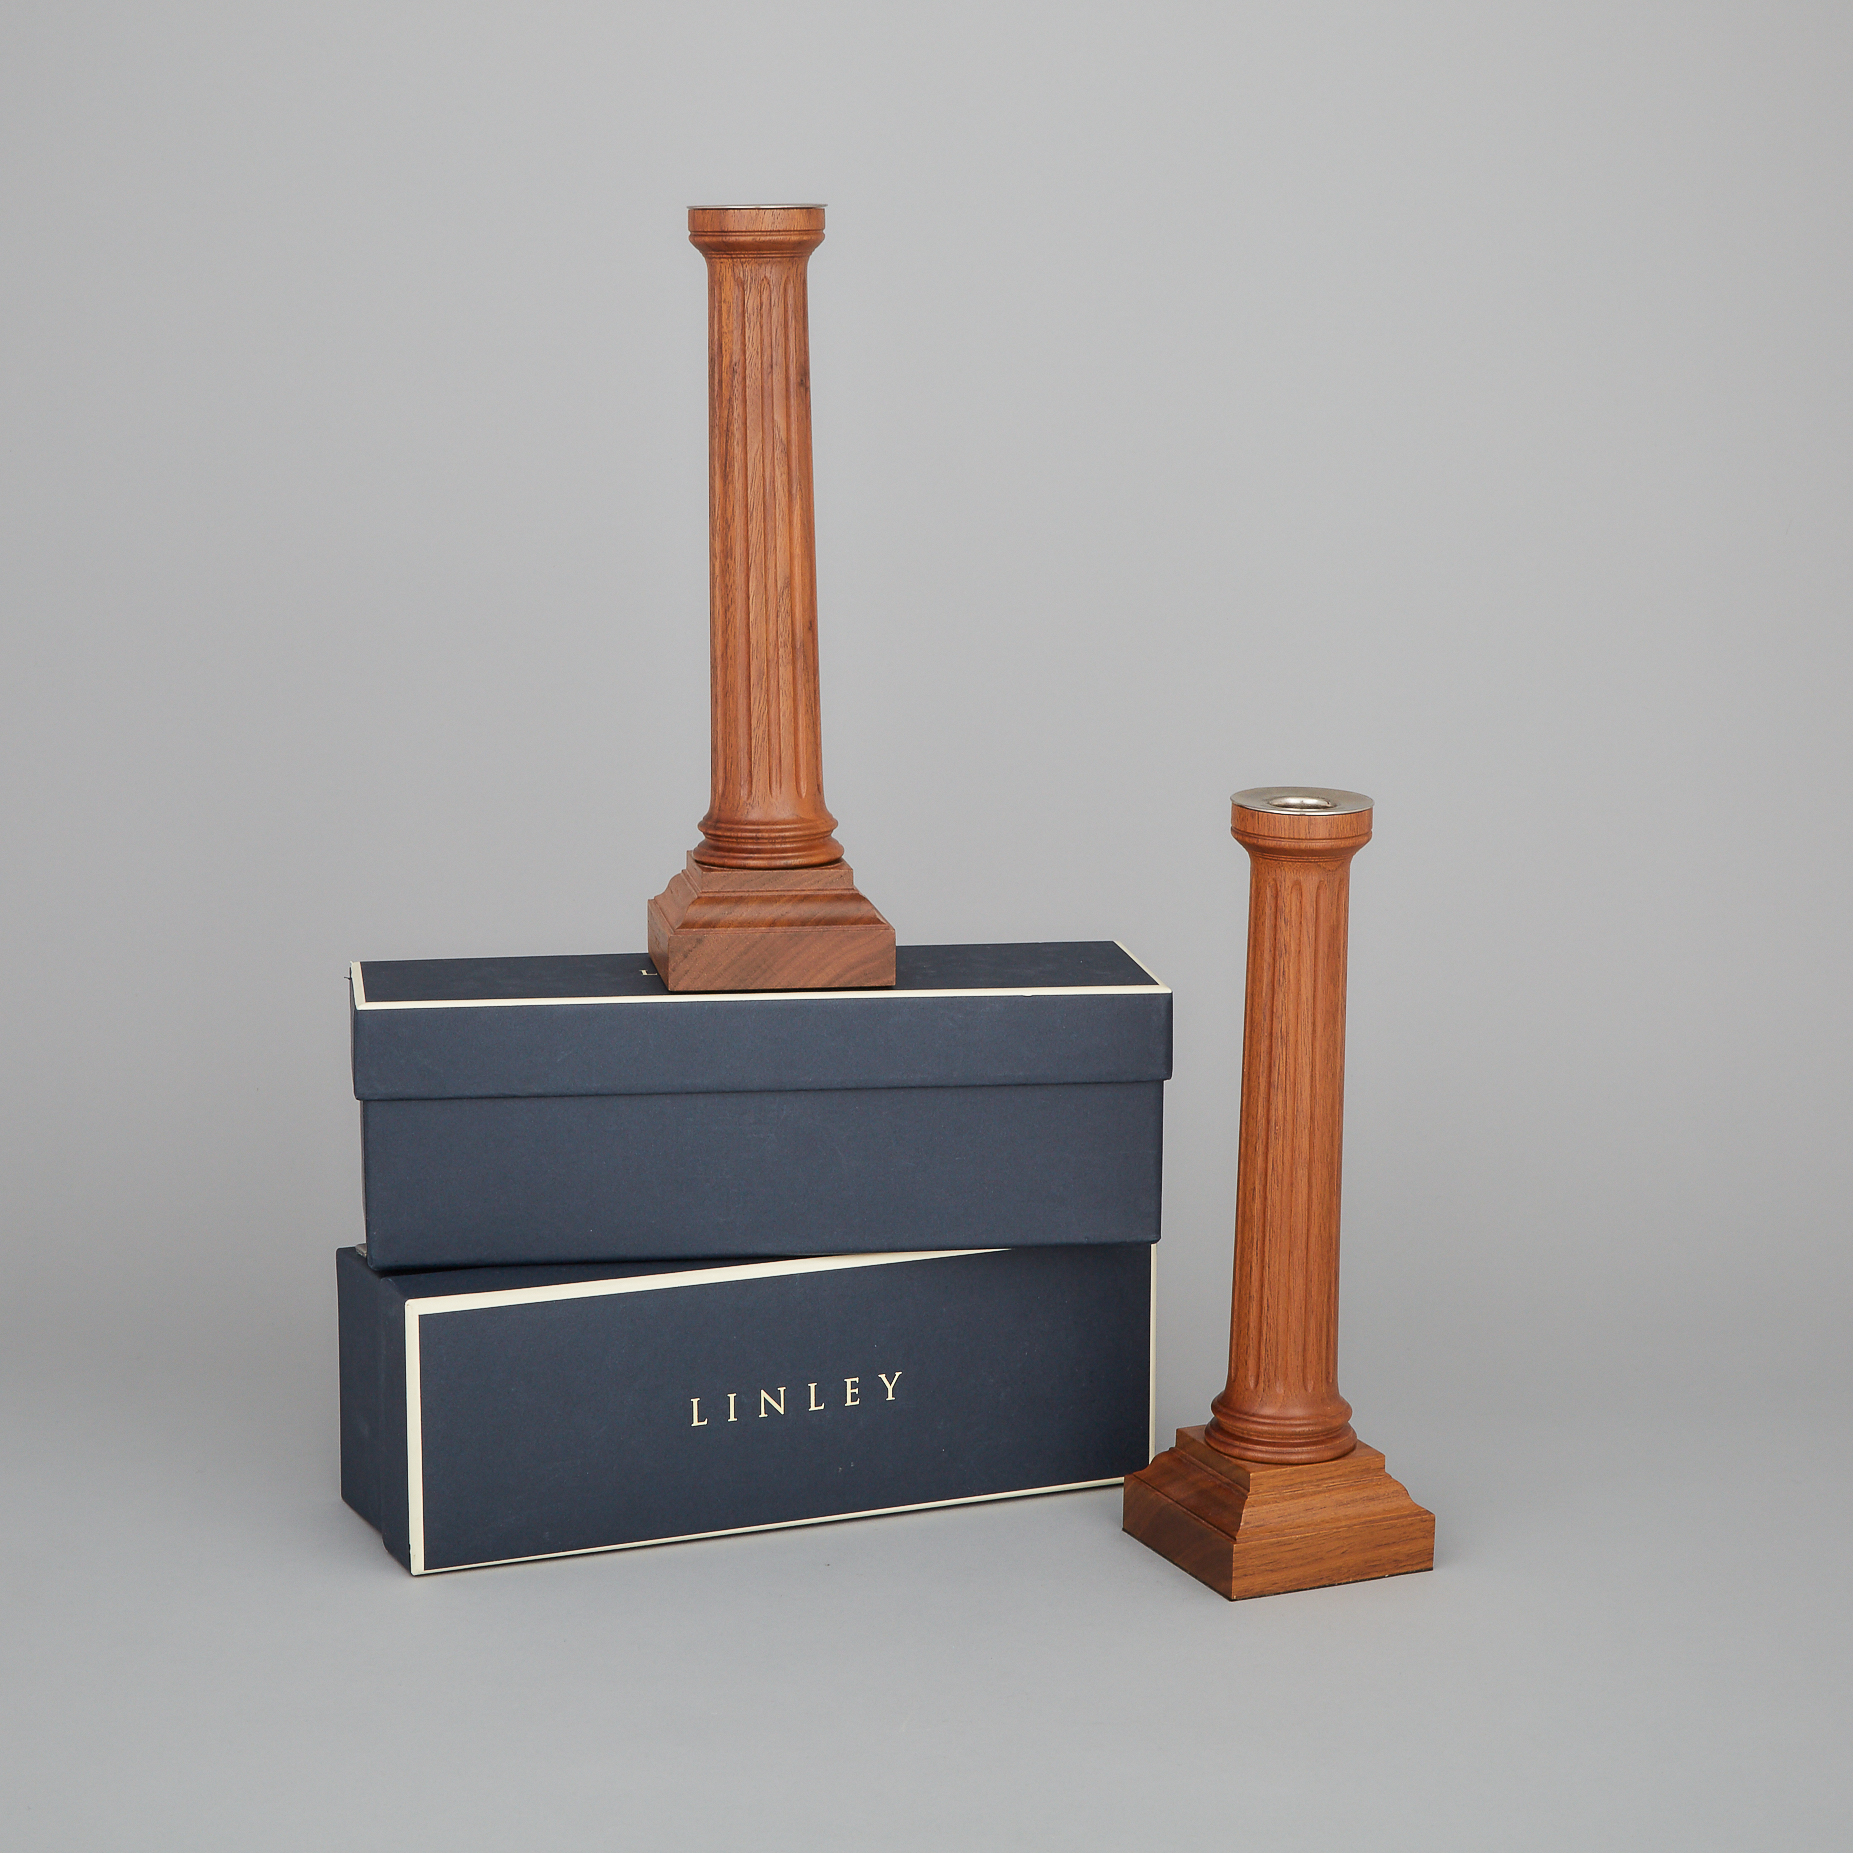 Pair of (David) Linley Mahogany Fluted Column Form Candlesticks, Modern